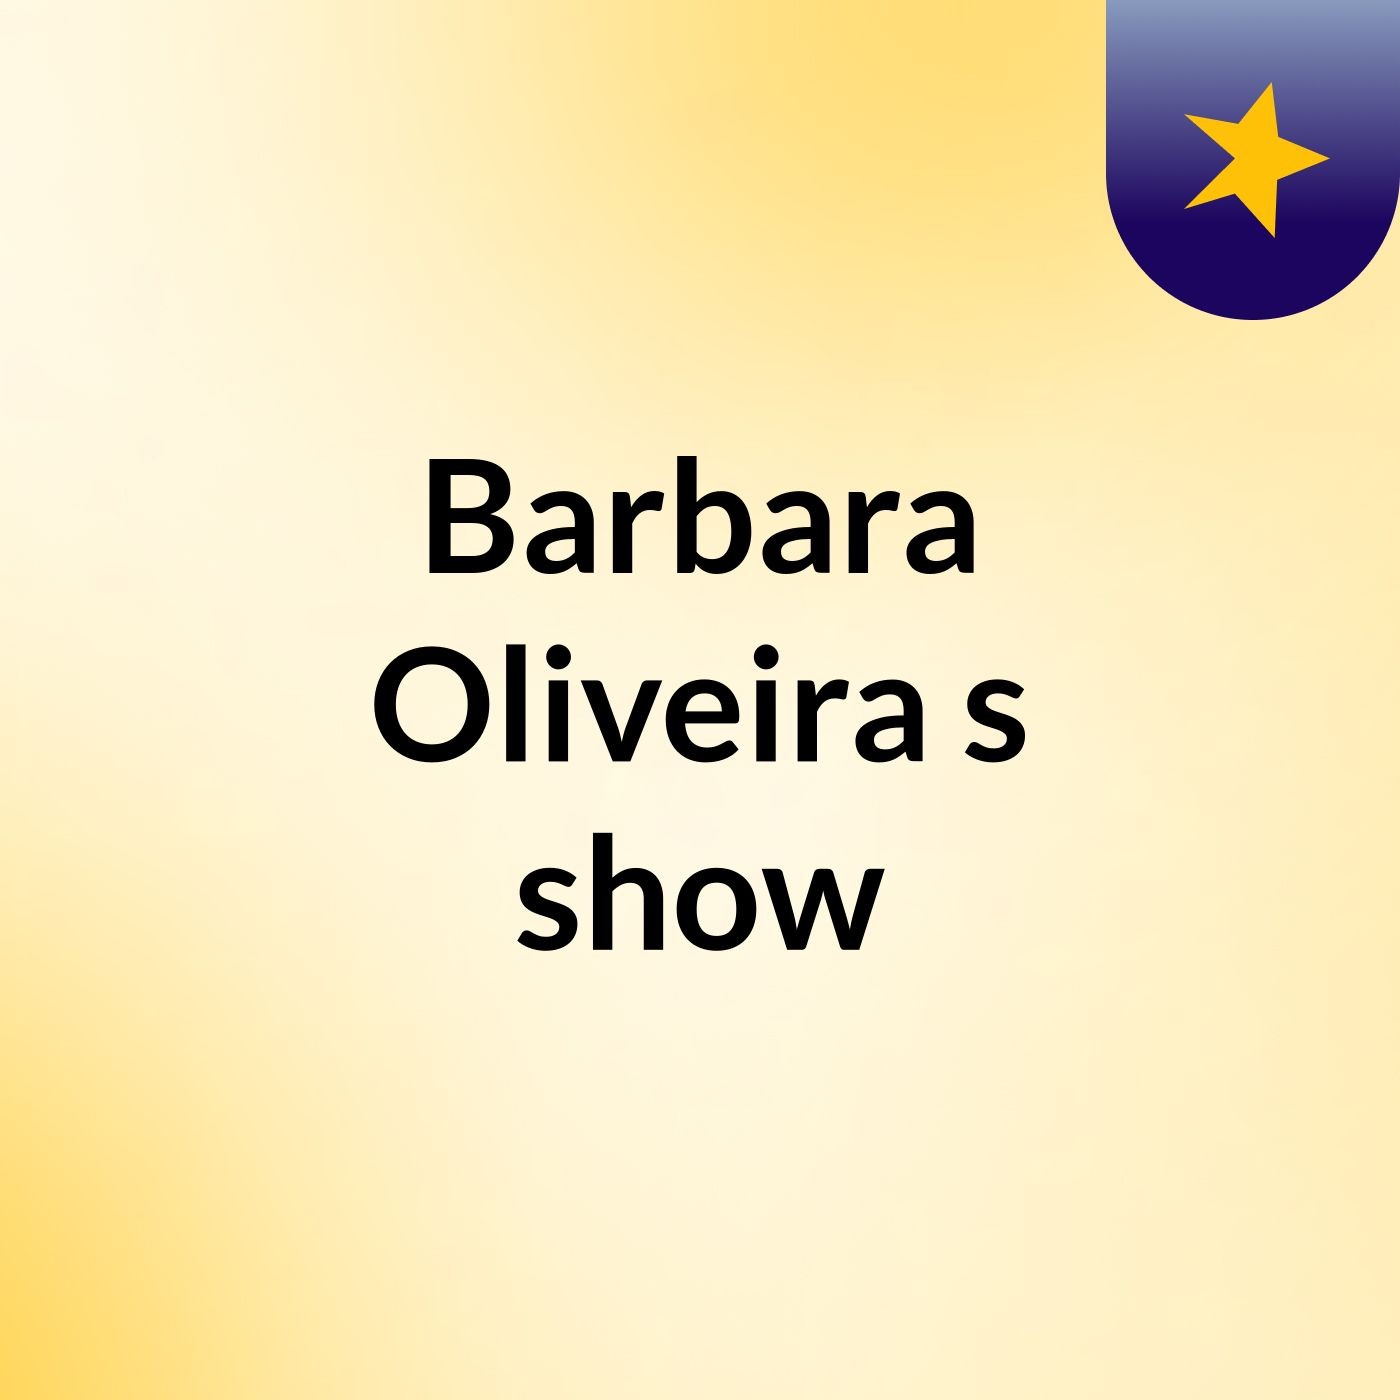 Barbara Oliveira's show